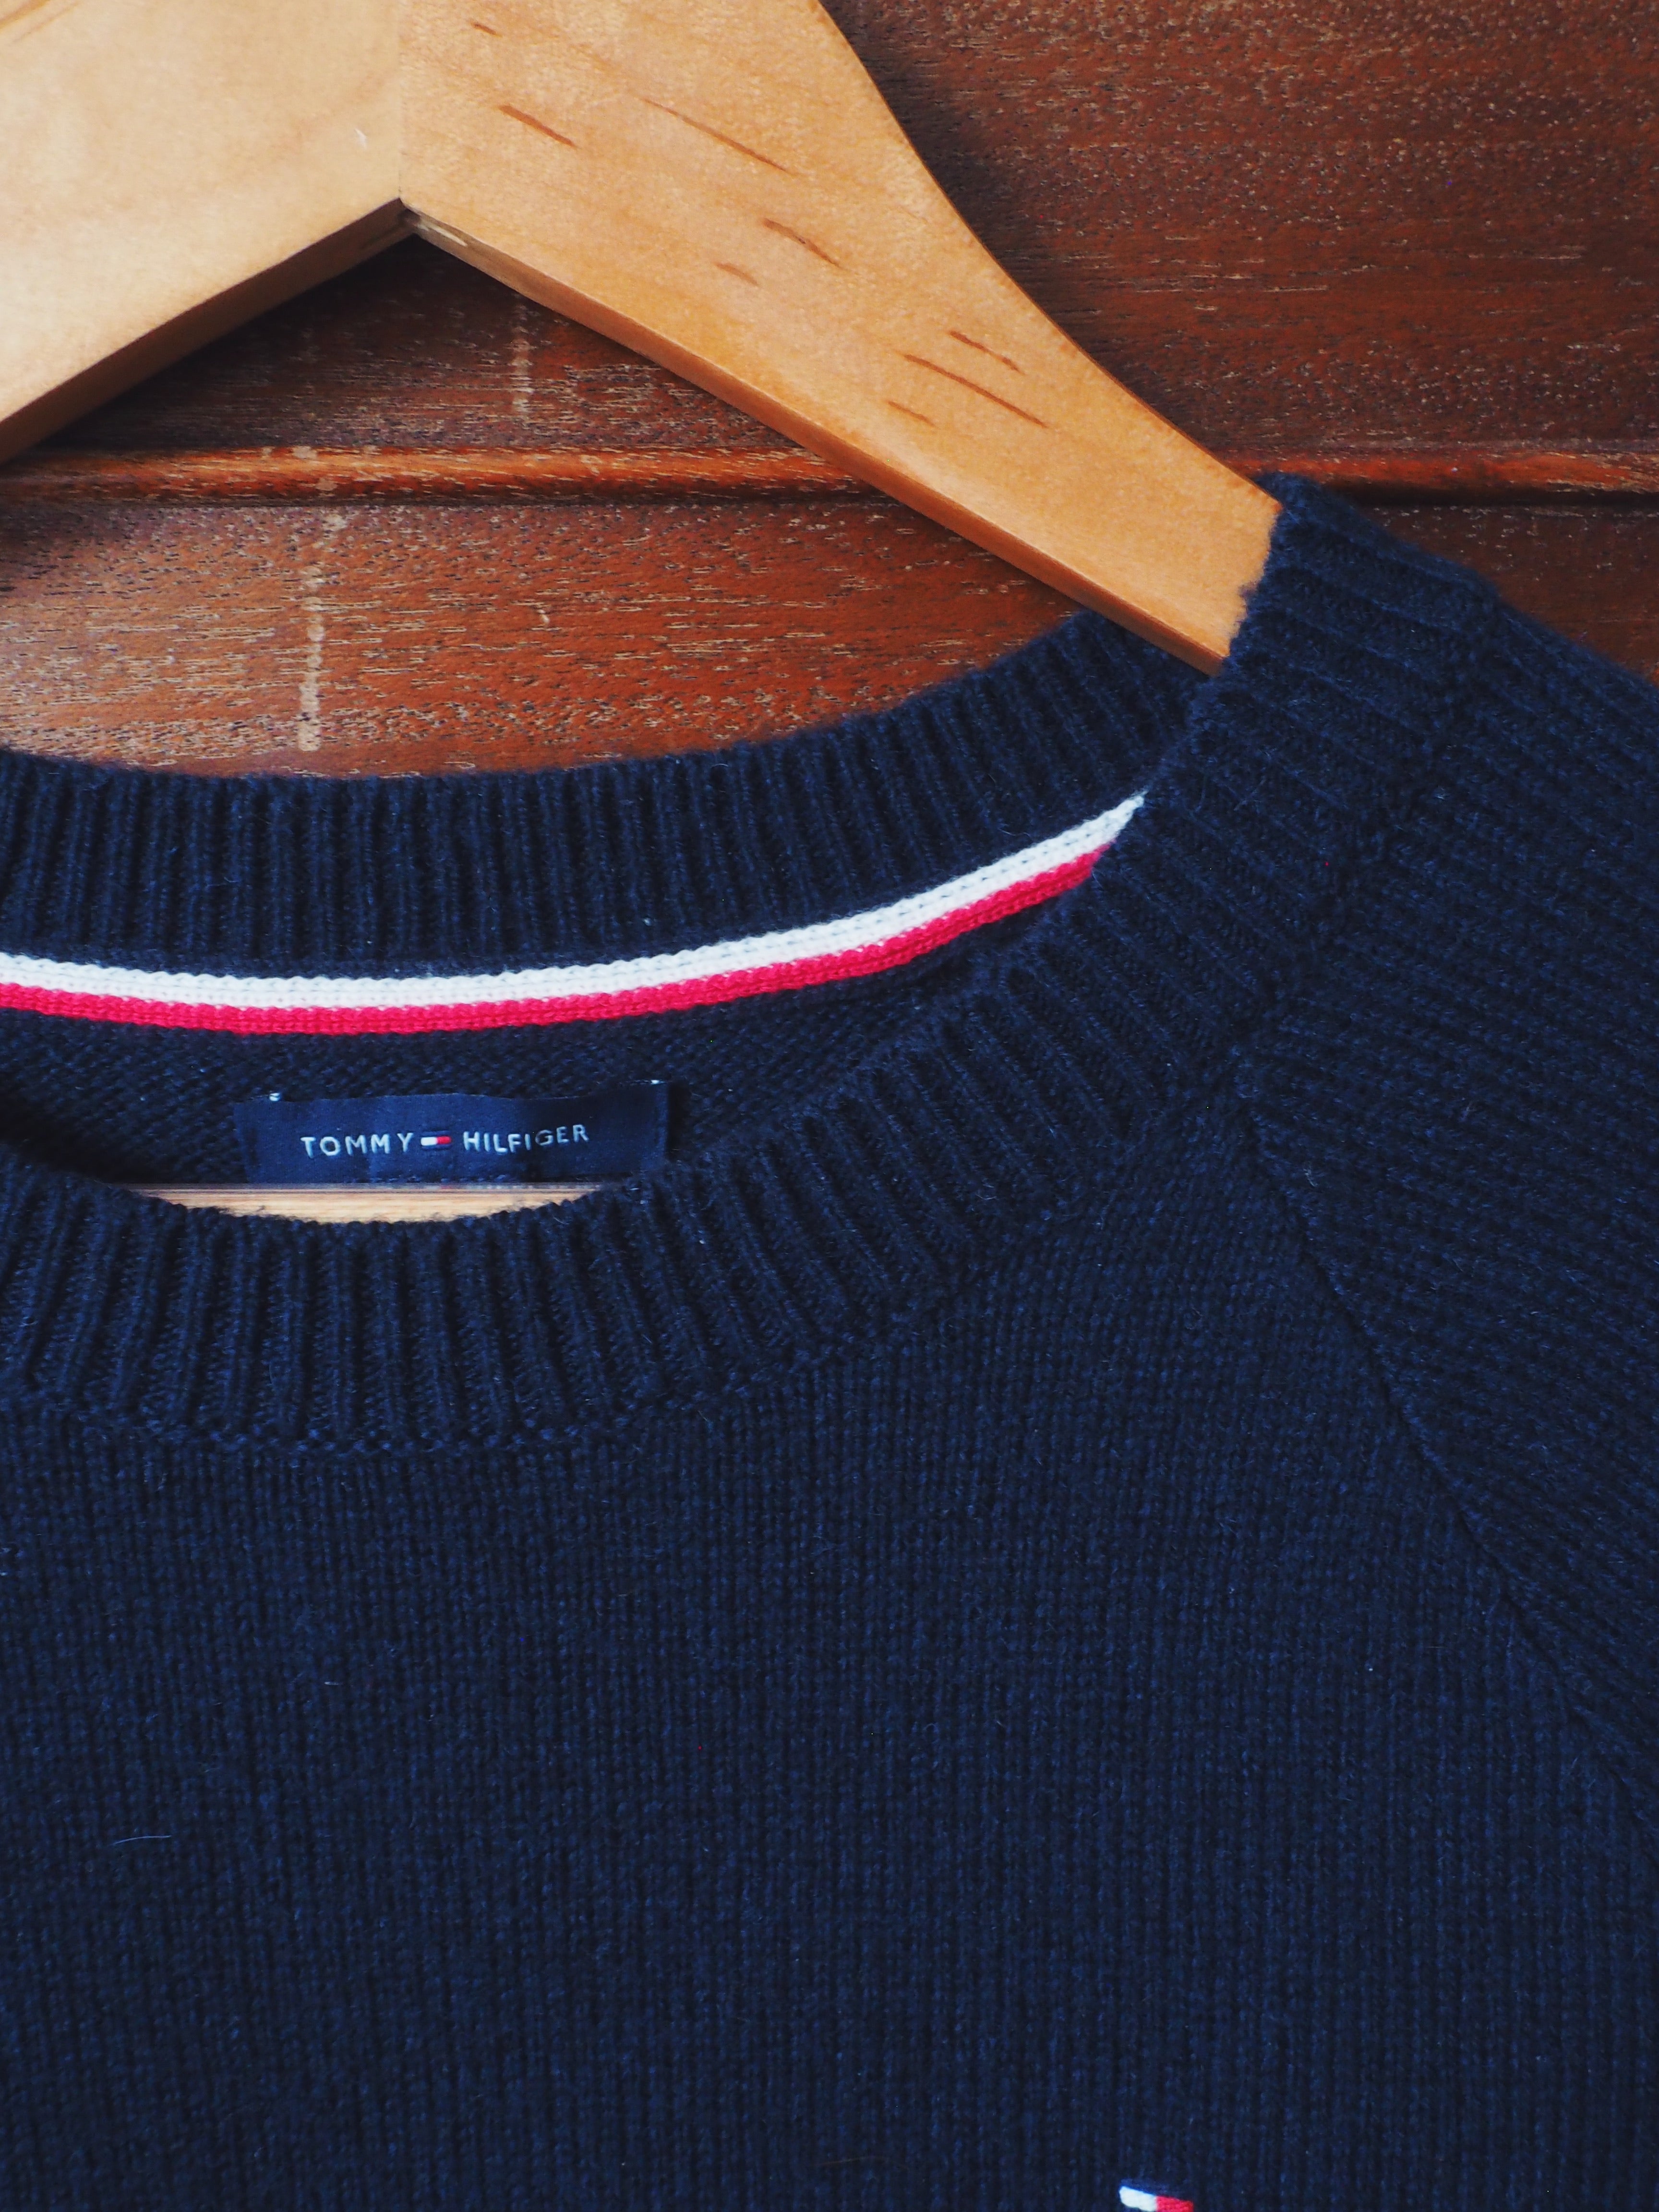 90's Tommy Hilfiger Crewneck Sweater